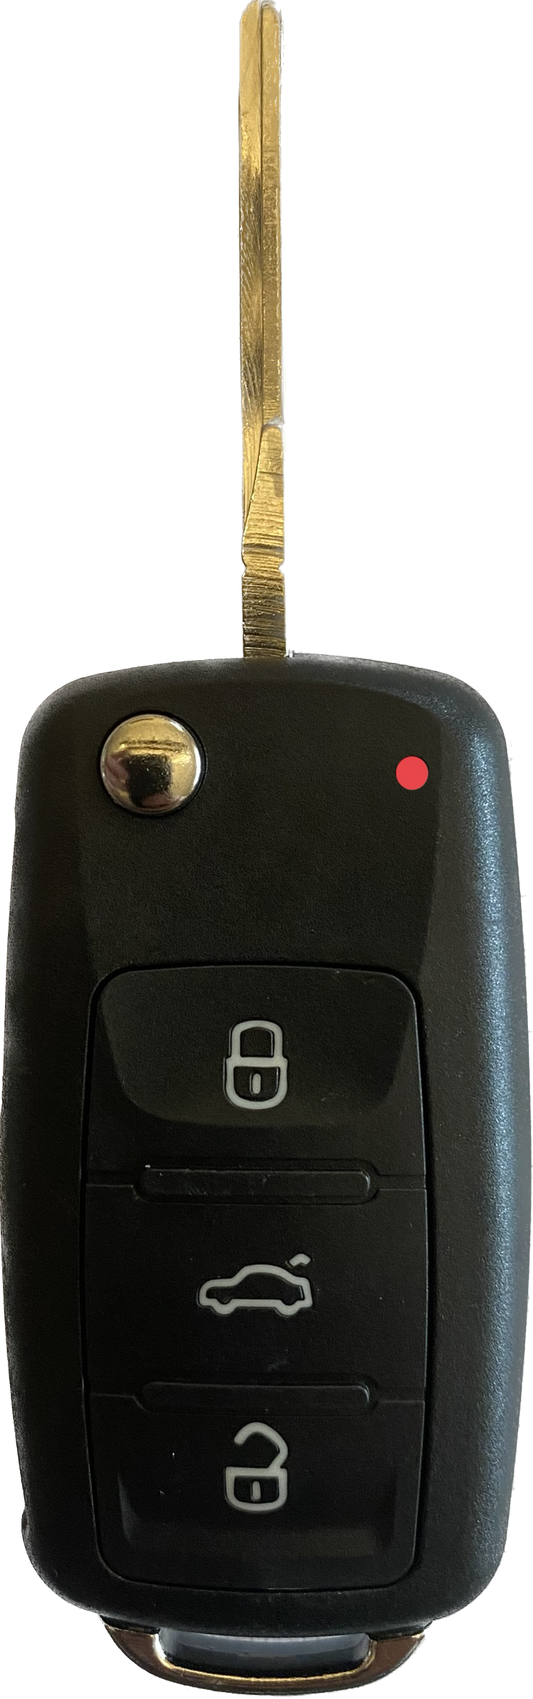 Autoschlüssel komplett KEYLESS GO Funk Klappschlüssel kompatibel für VW 3 Tasten 5K0 837 202 BH